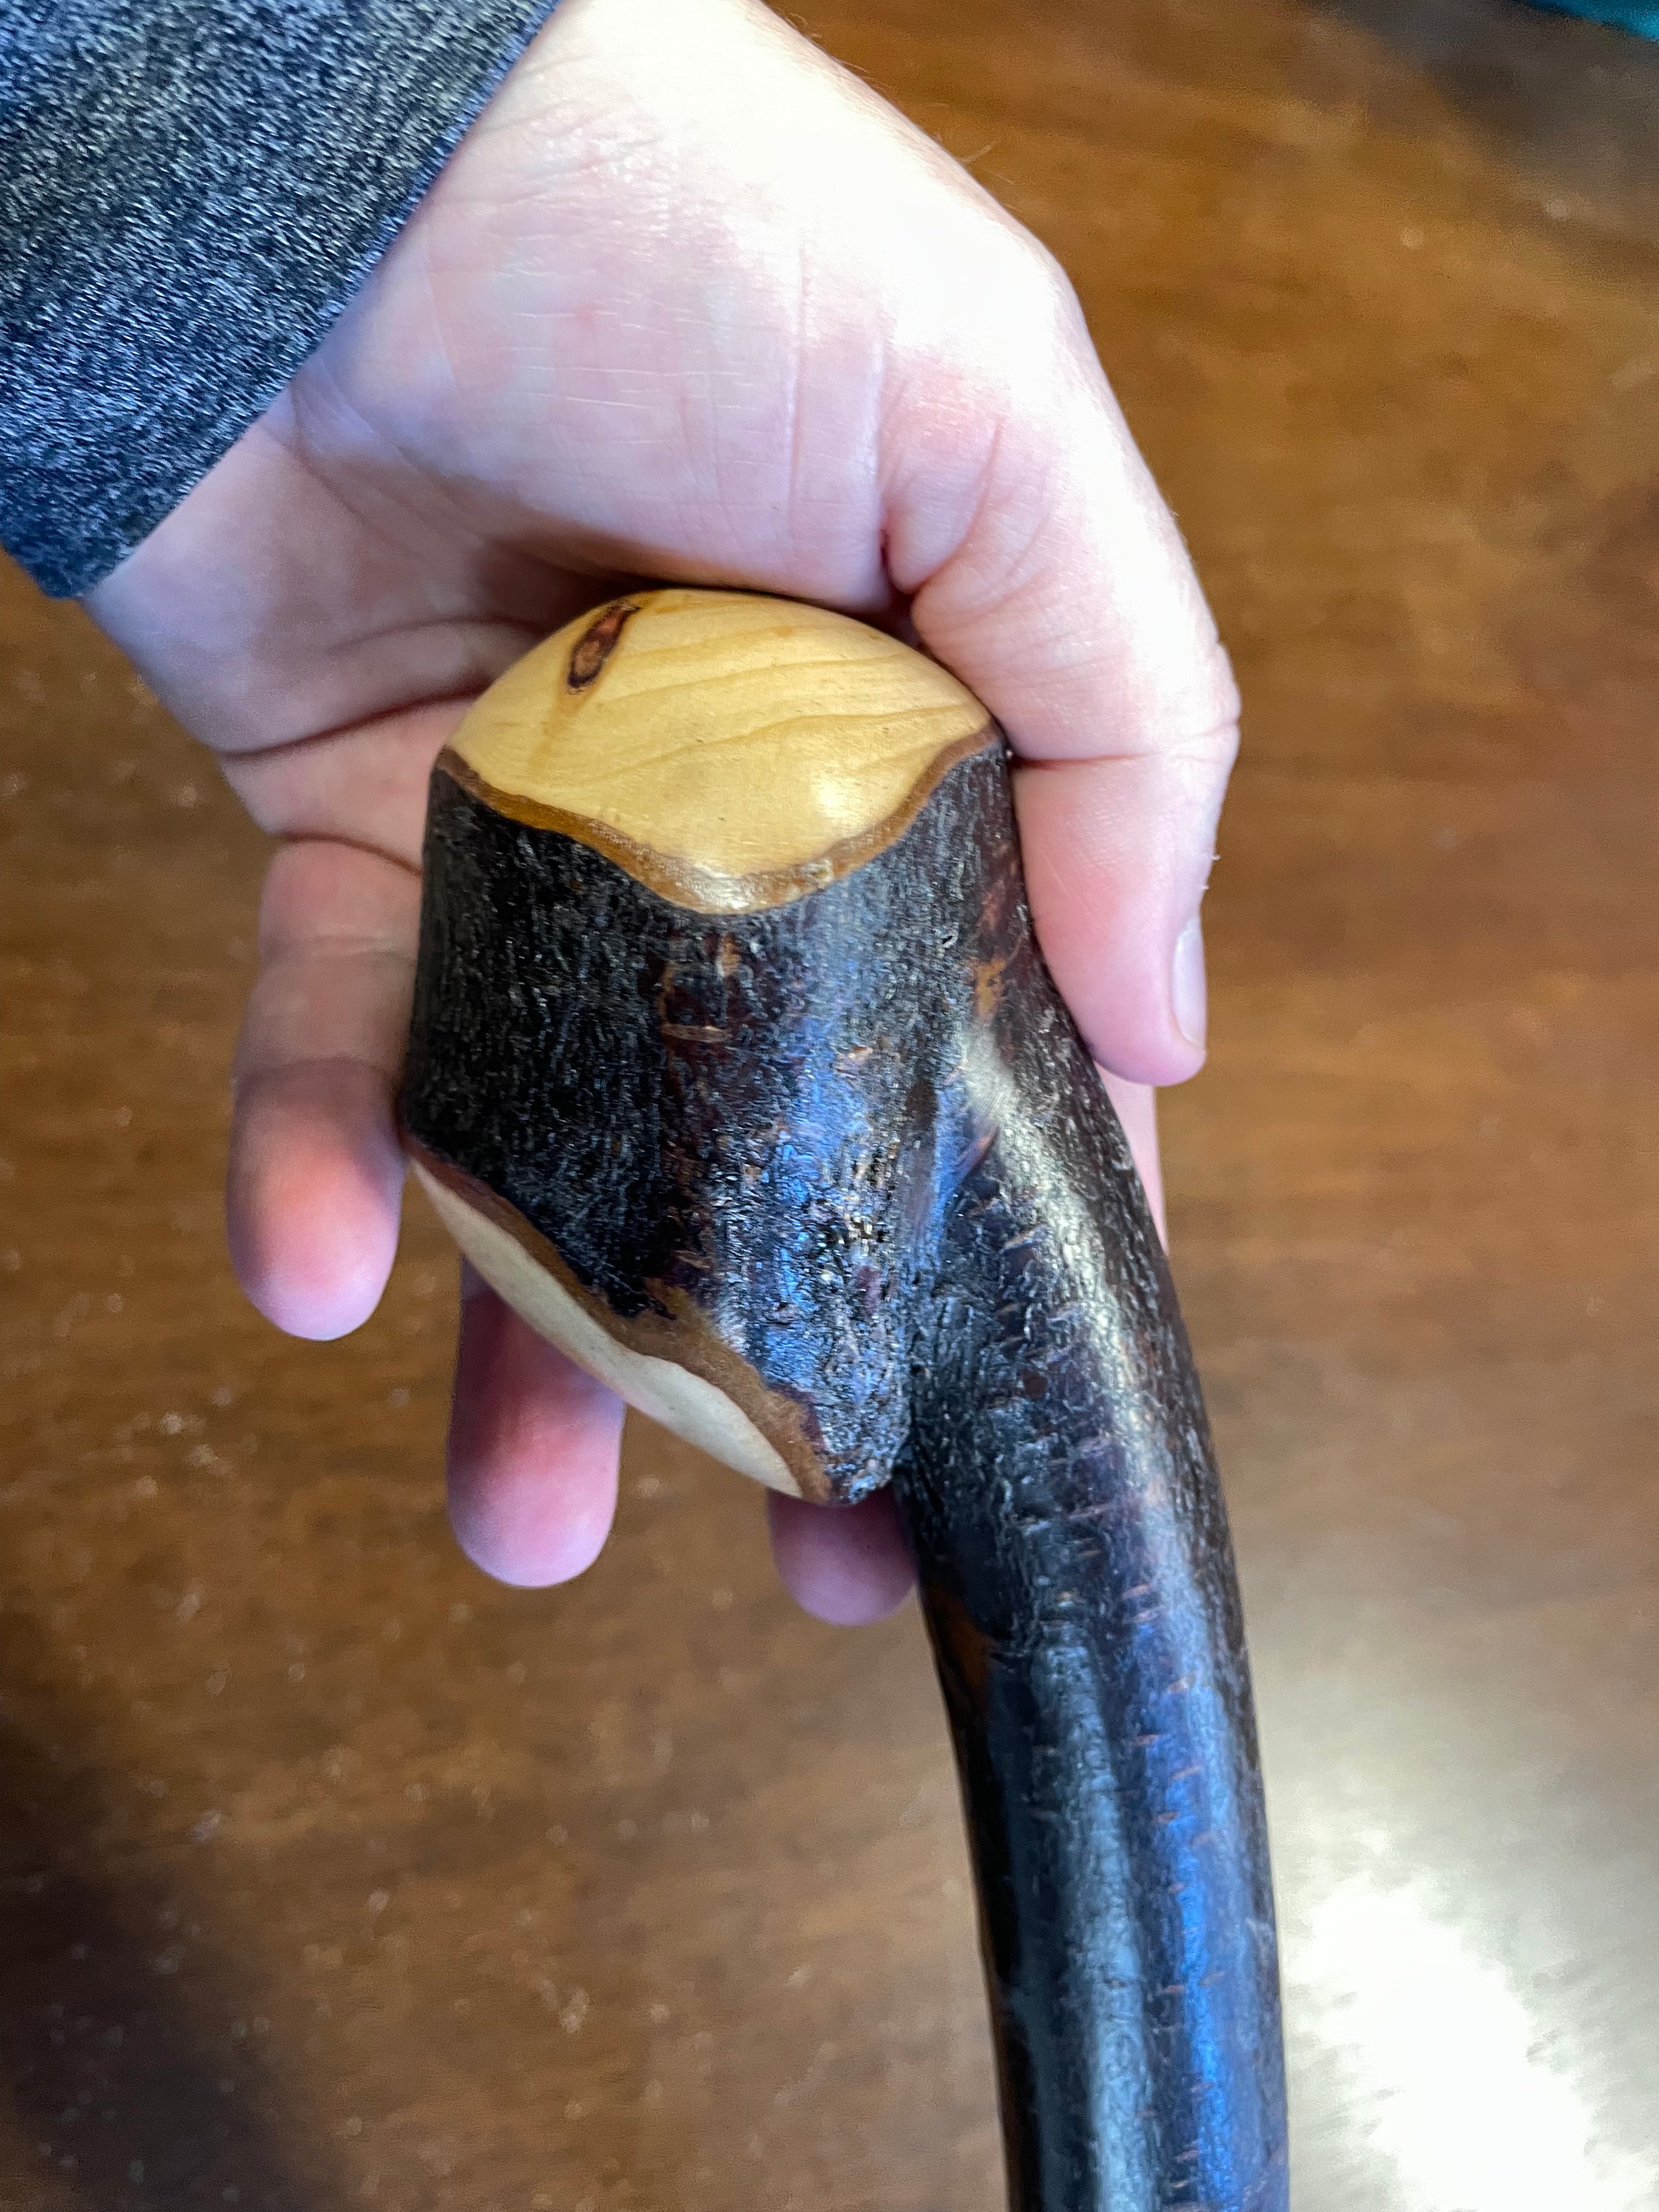 Blackthorn Shillelagh -19 1/2 inch - Handmade in Ireland